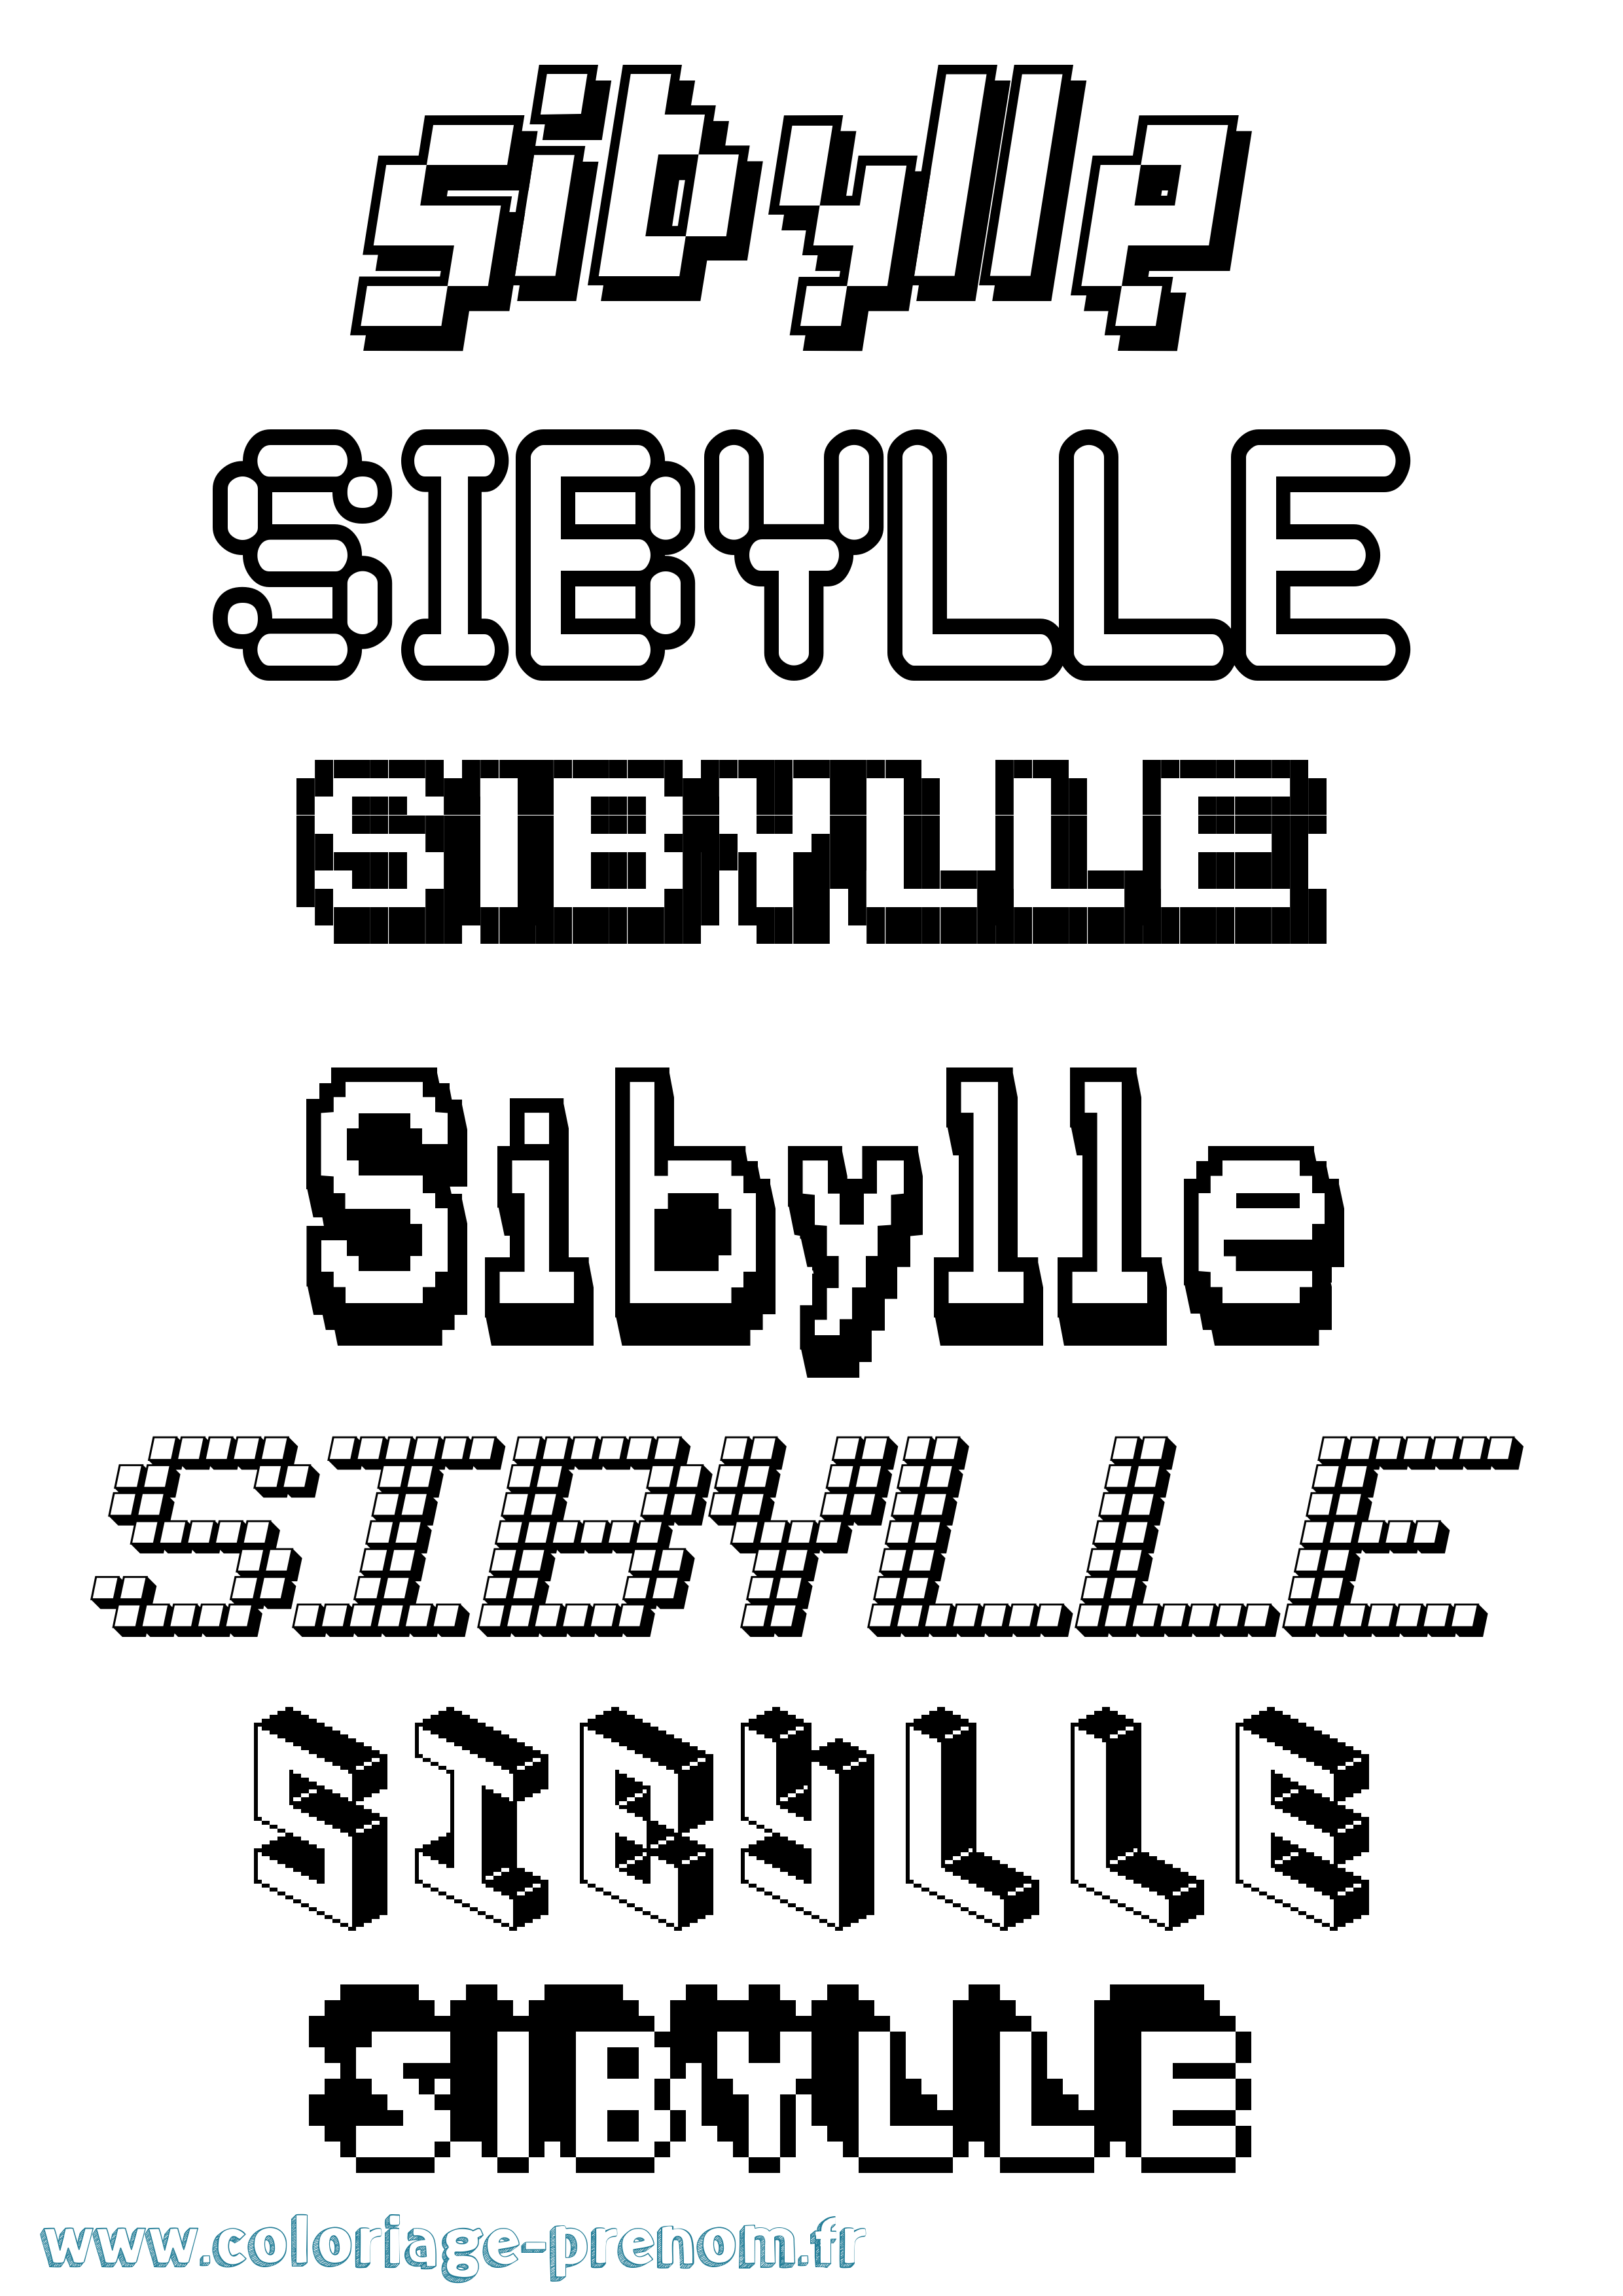 Coloriage prénom Sibylle